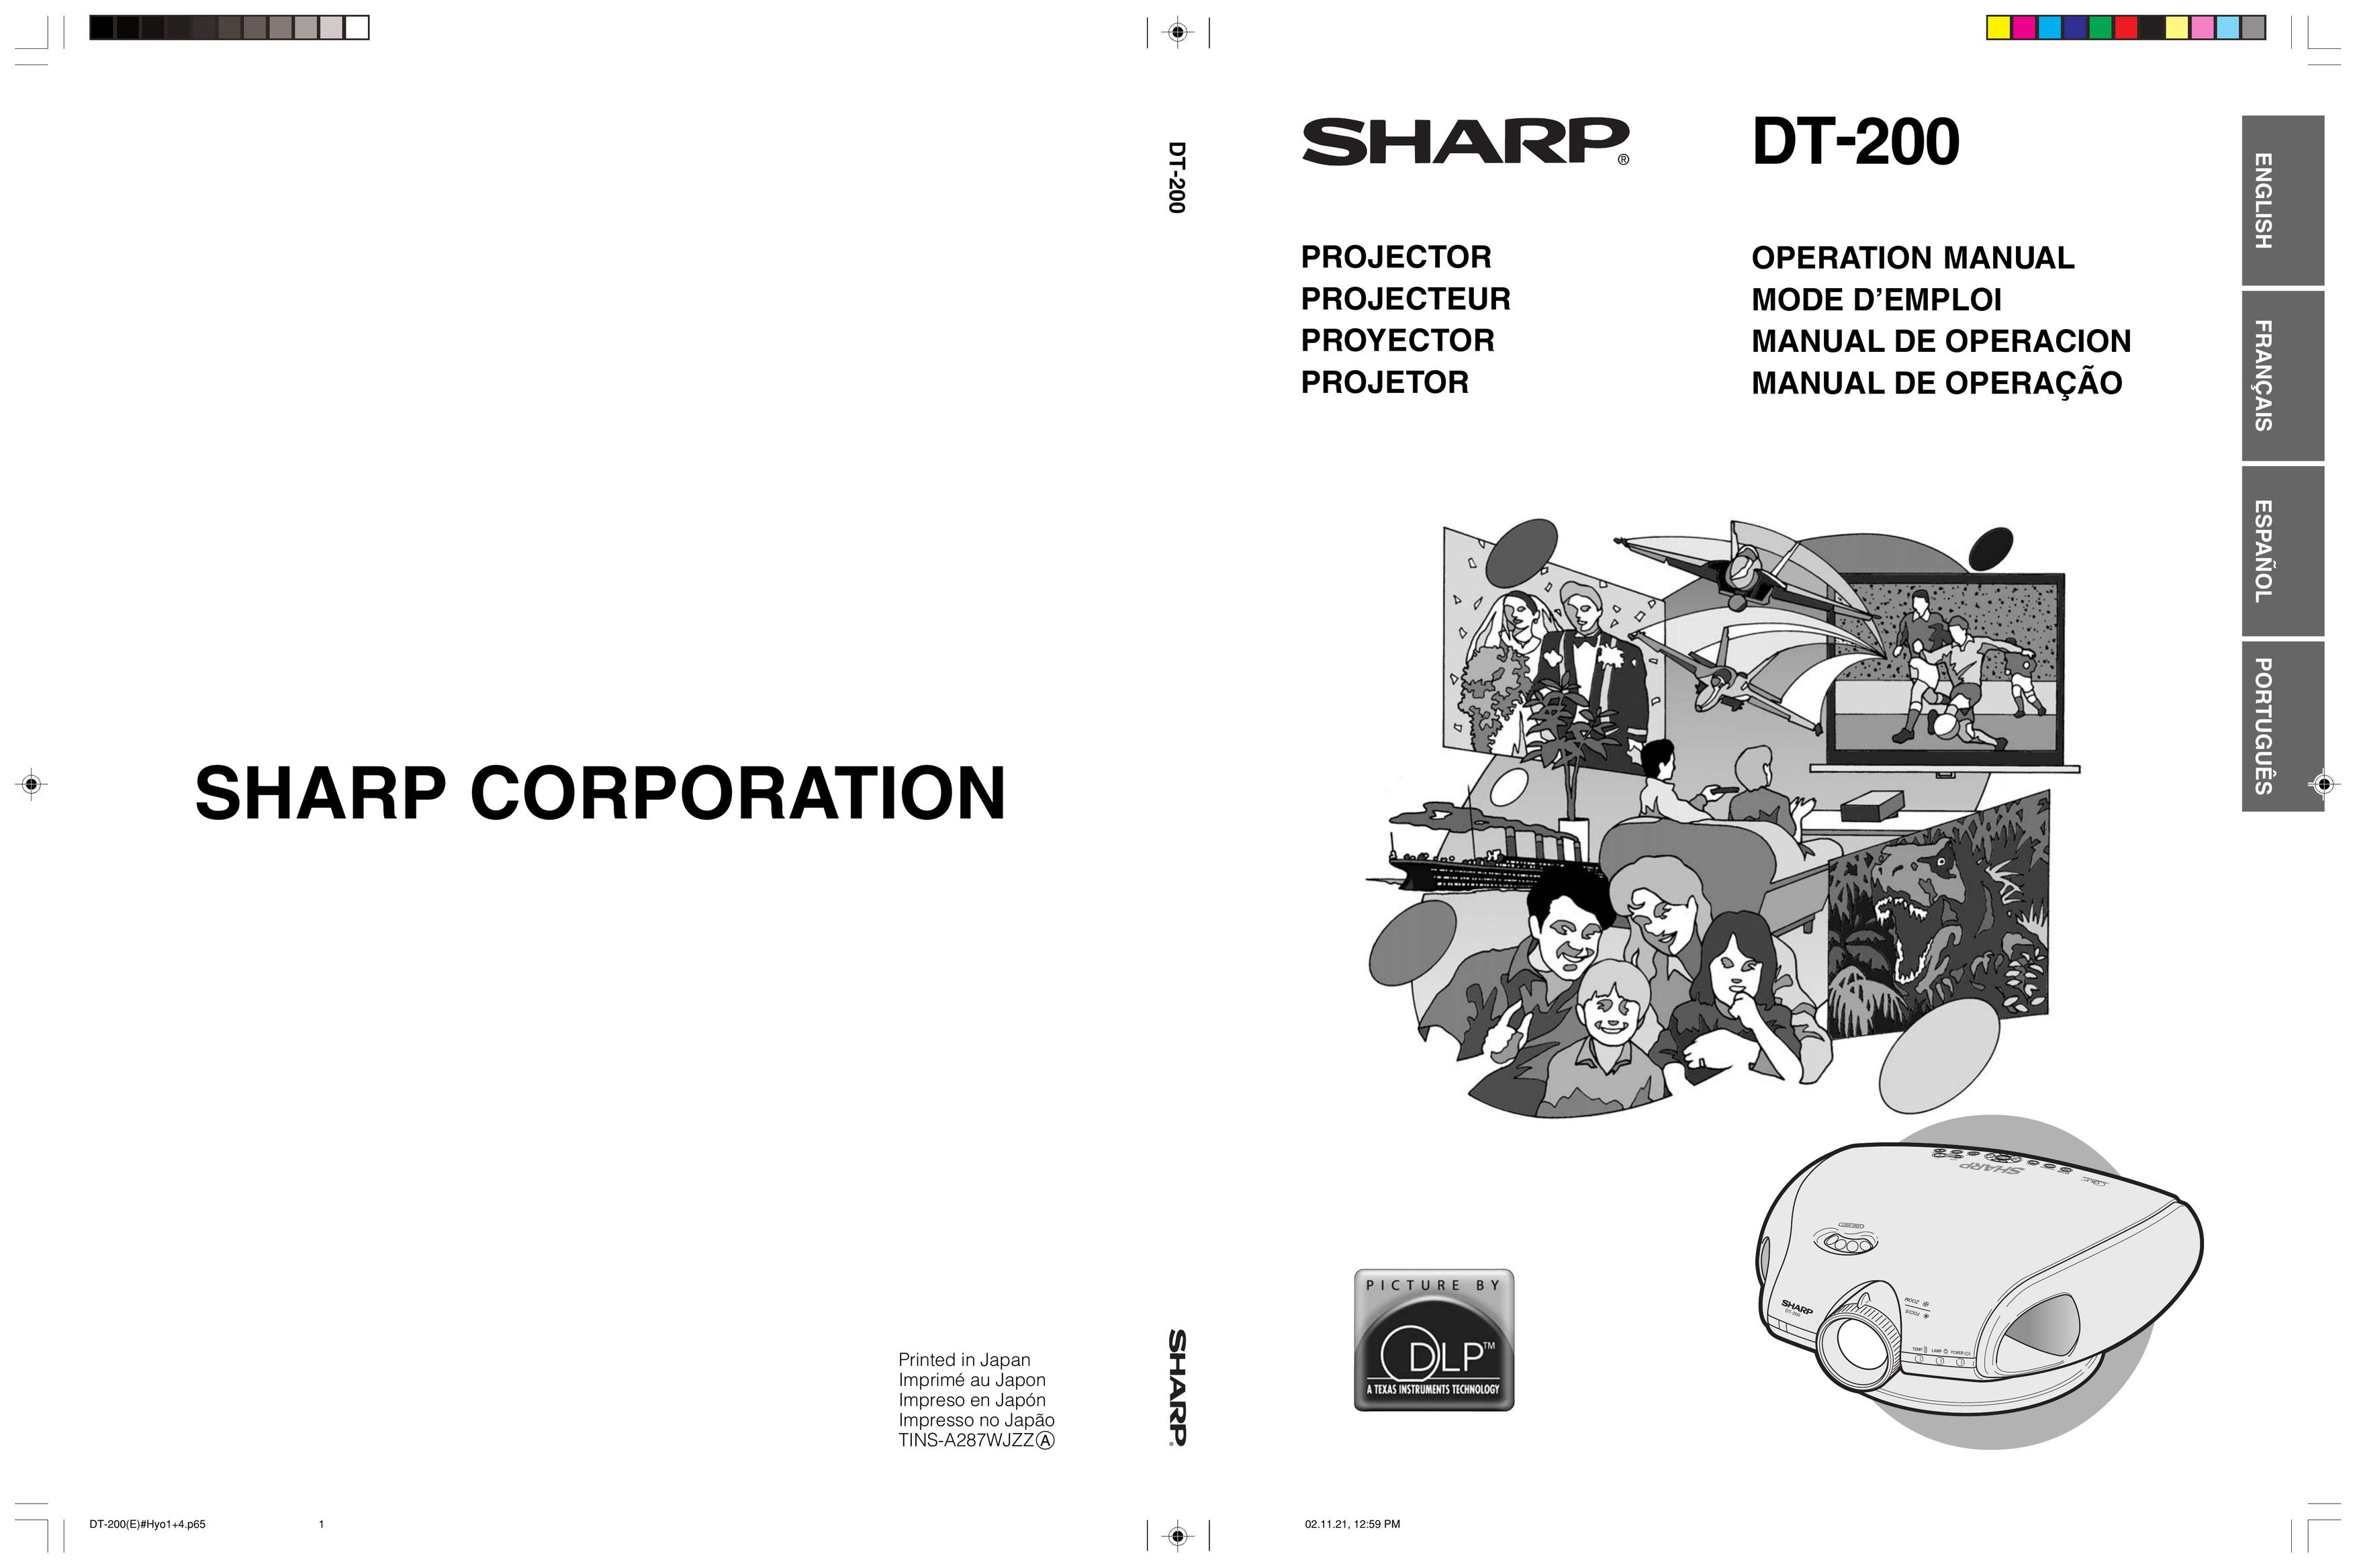 Sharp DT-200 Projector User Manual